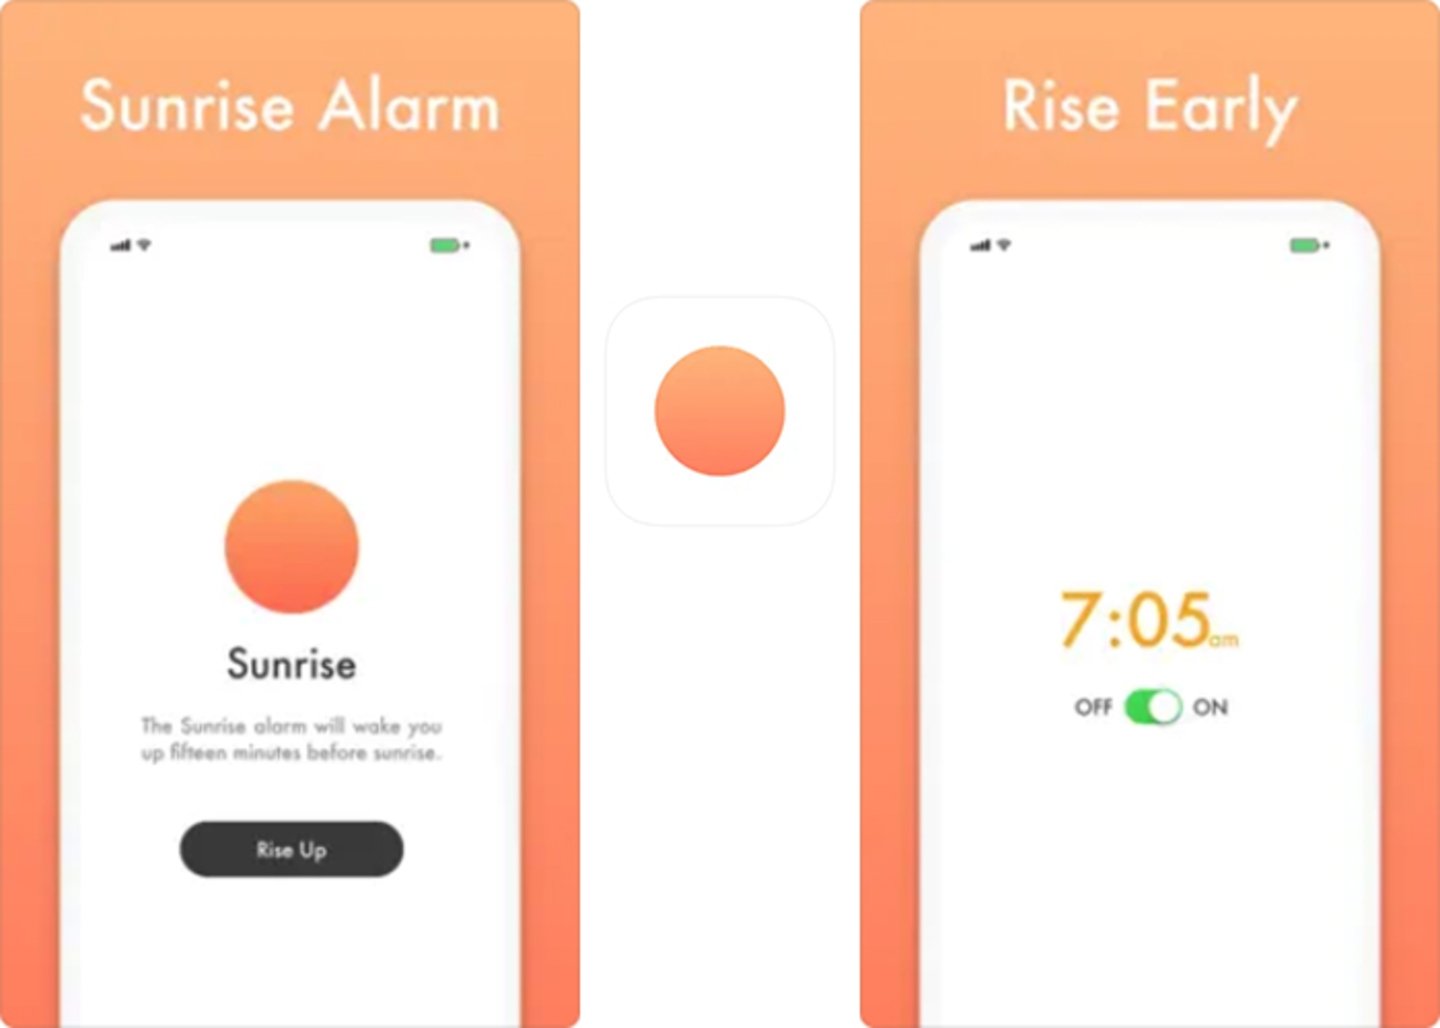 Despiertate con paz- Sunrise- Soothing Alarm Clock lo hace posible